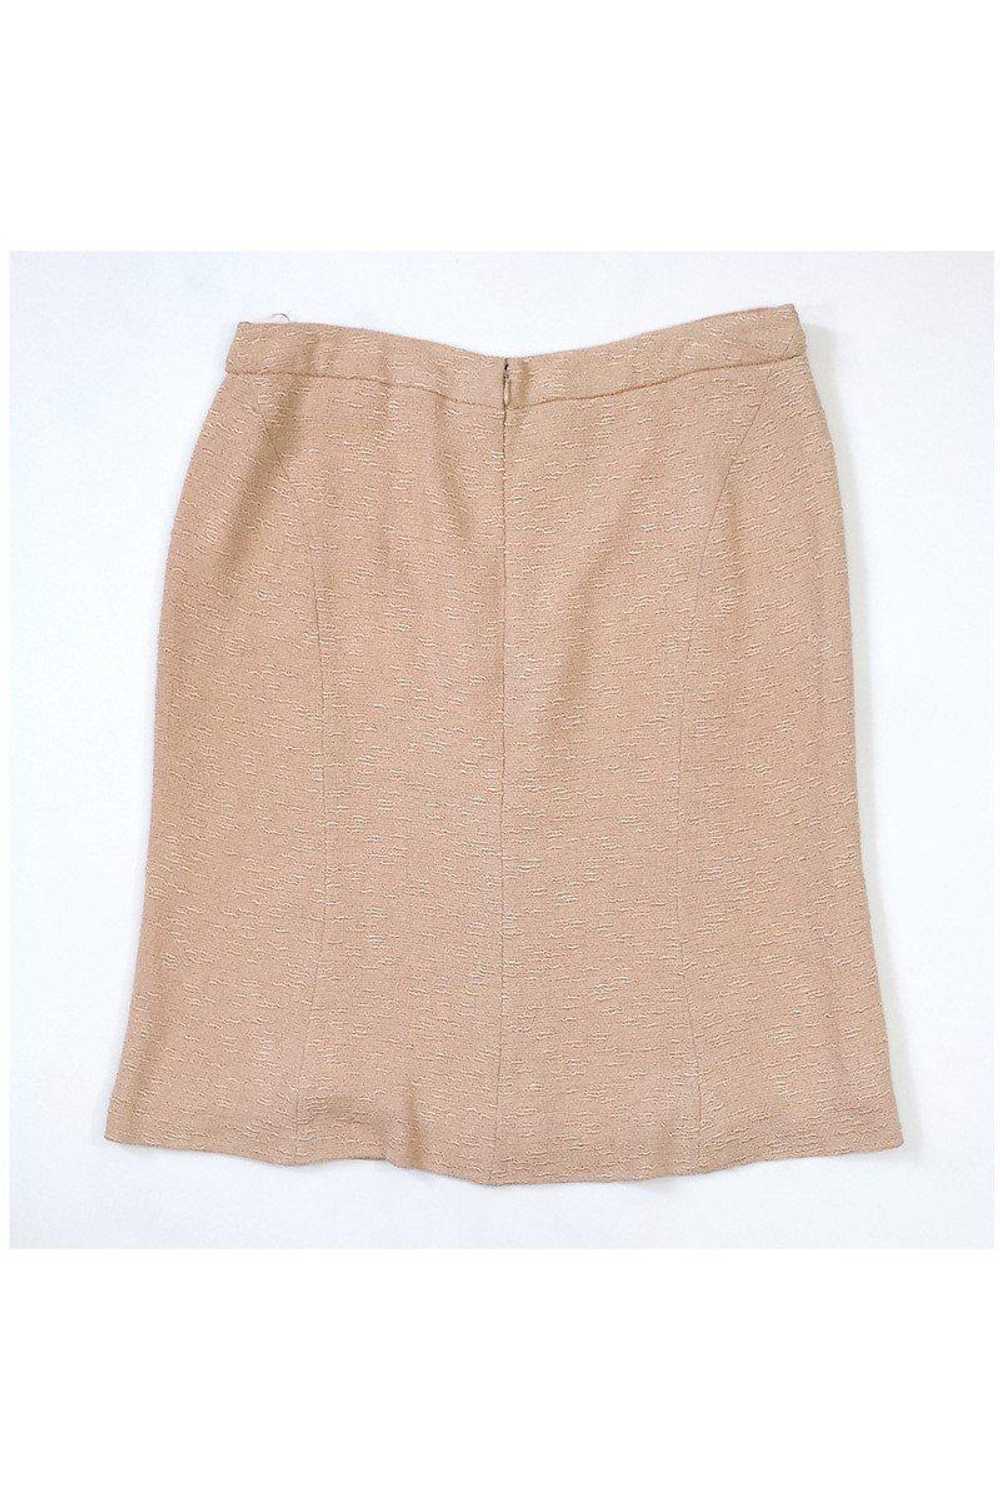 Moschino - Blush Silk Blend Pencil Skirt Sz 10 - image 2